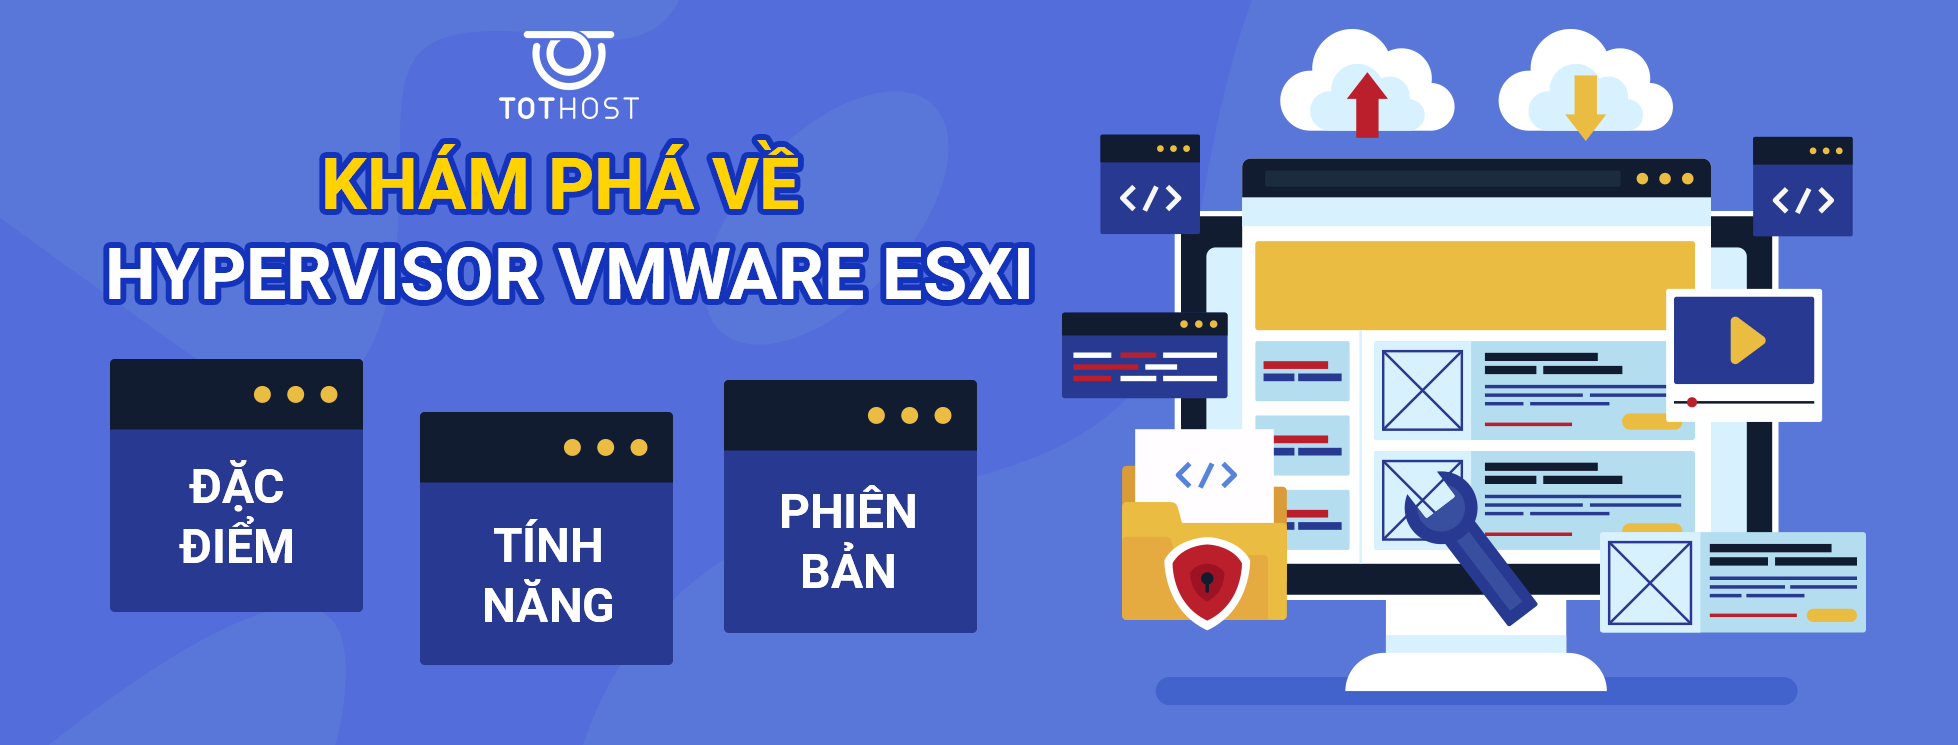 Tìm hiểu về Hypervisor VMware ESXi